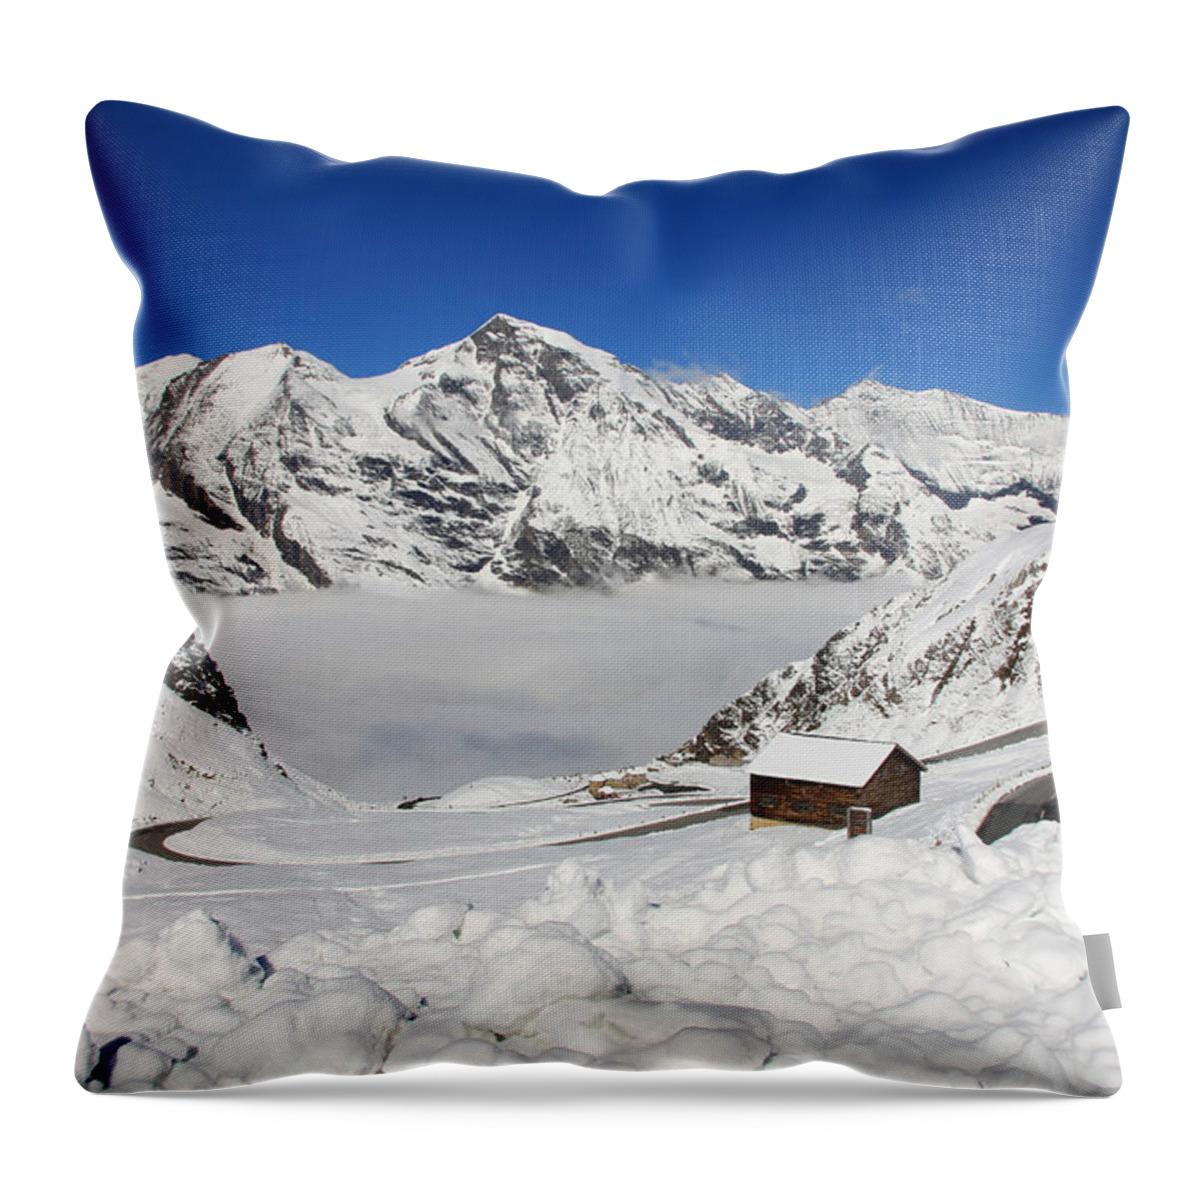 Austria Throw Pillow featuring the photograph Austrian Mountains #3 by Sue Leonard